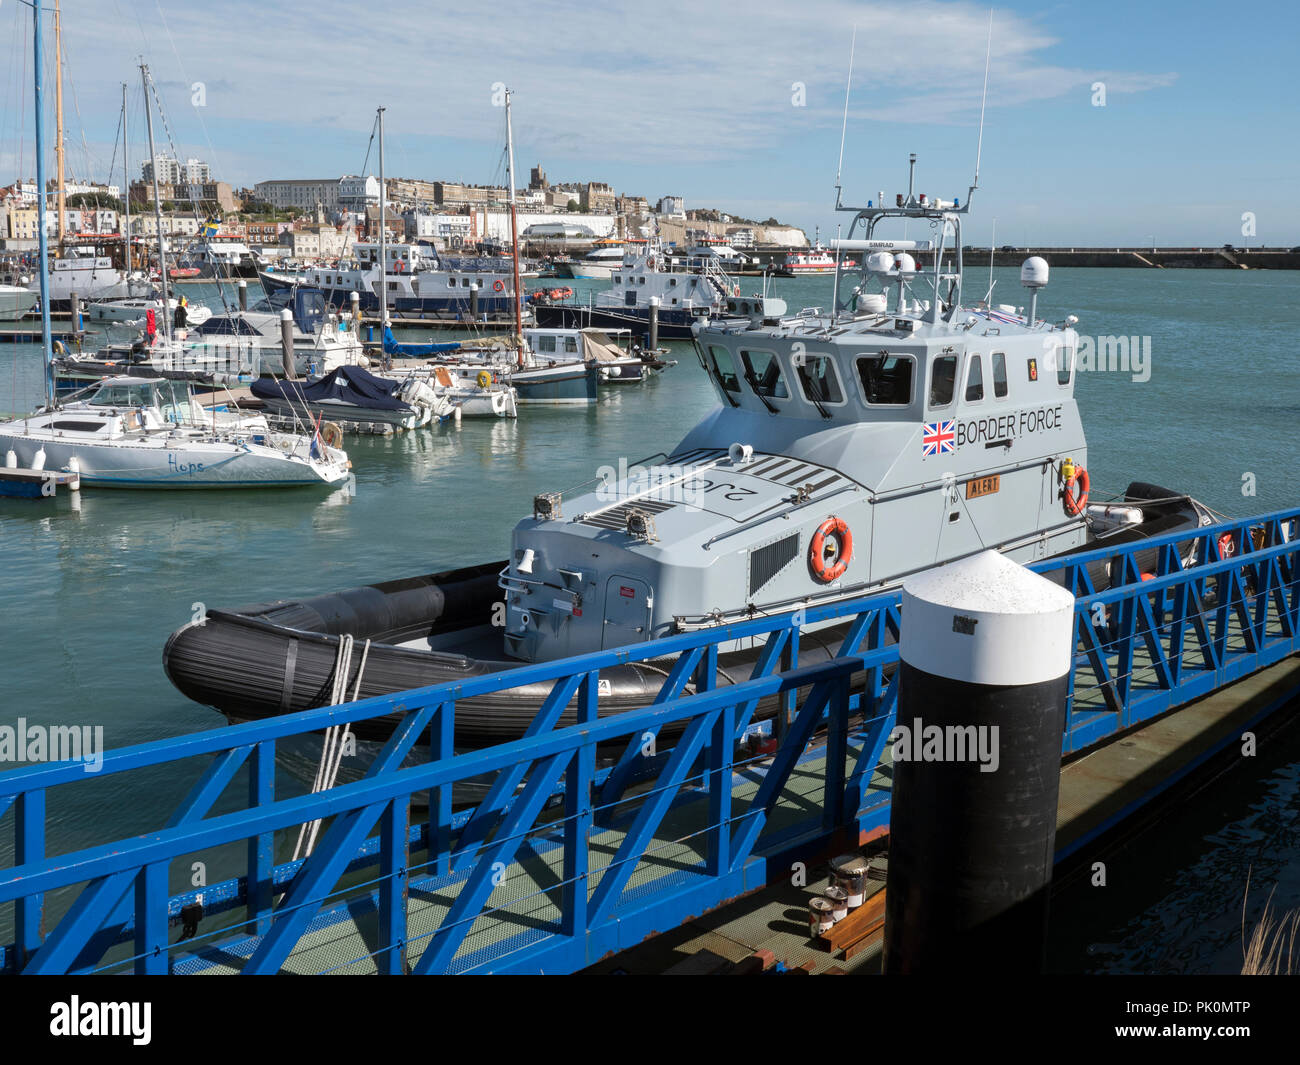 UK Border force Cutter in Royal Harbour Ramsgate Kent UK Stockfoto